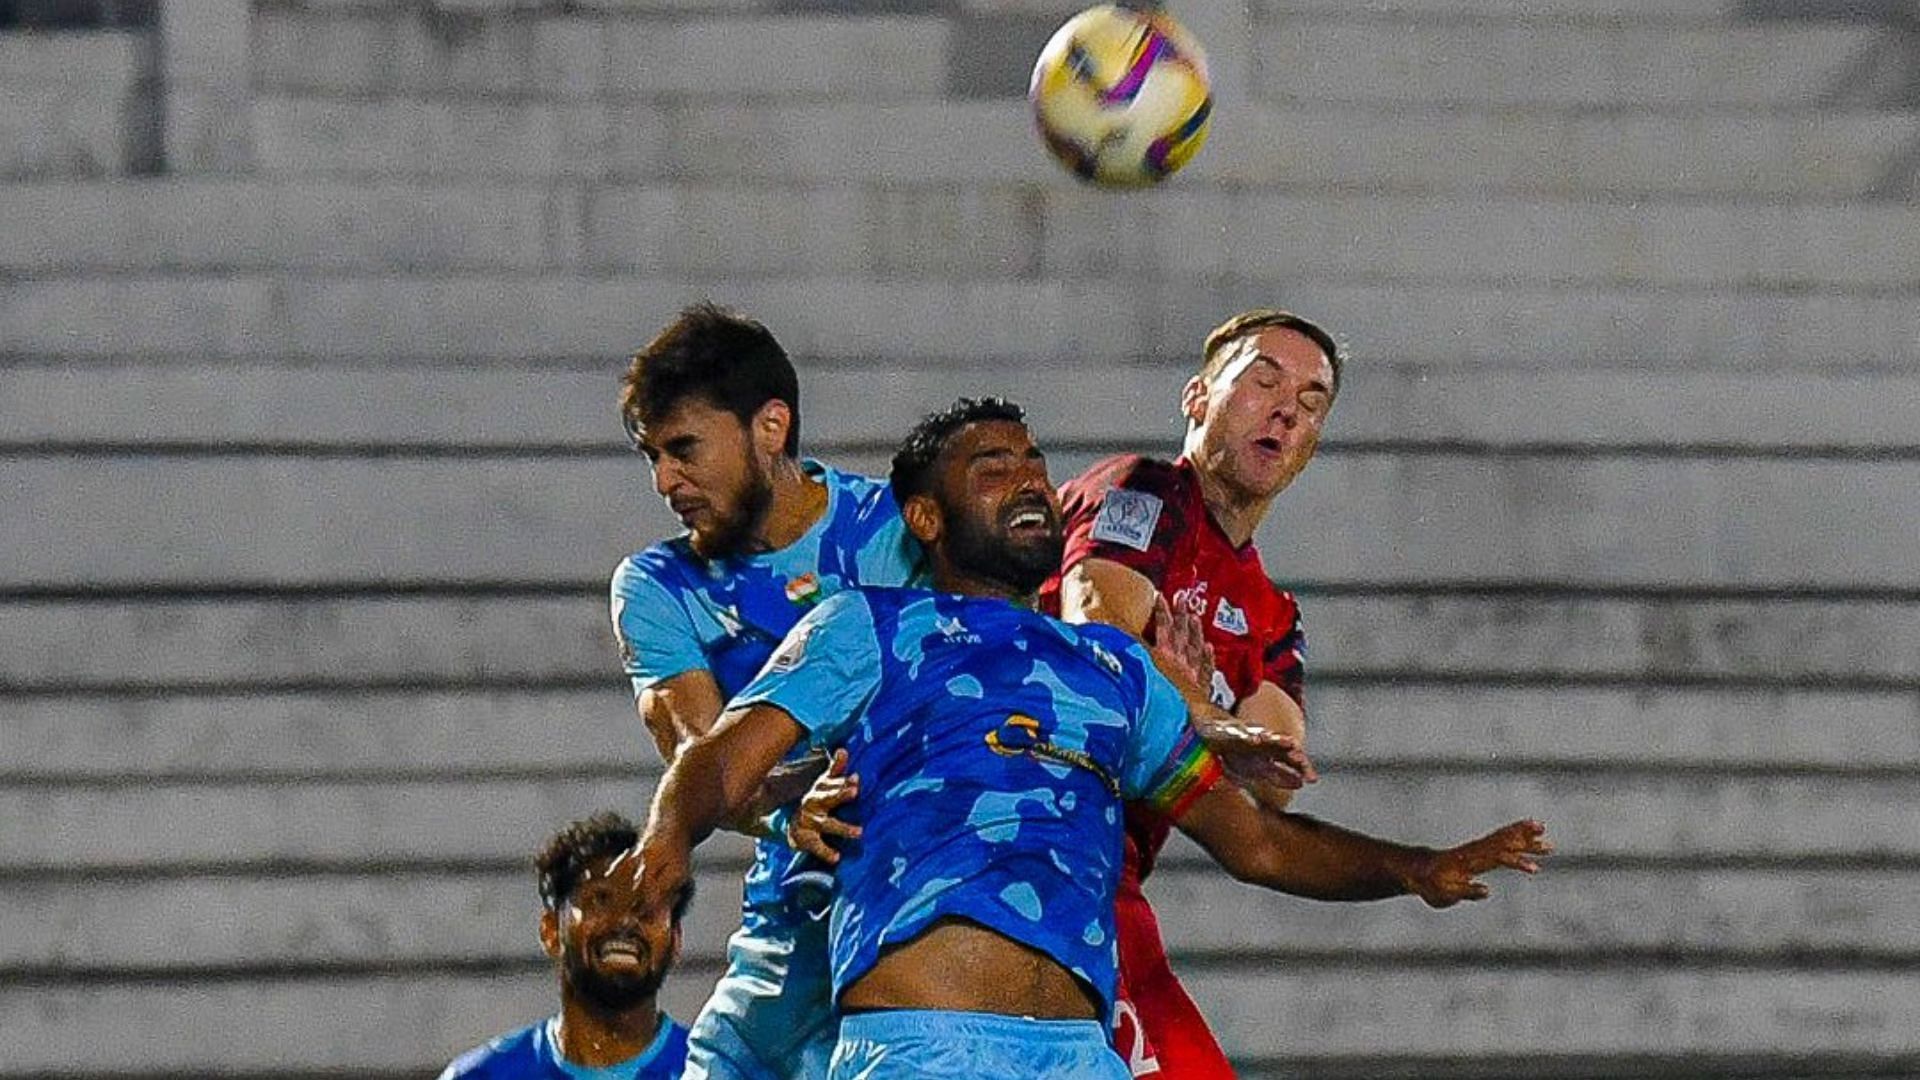 Gokulam Kerala FC player attempting a header during corner kick